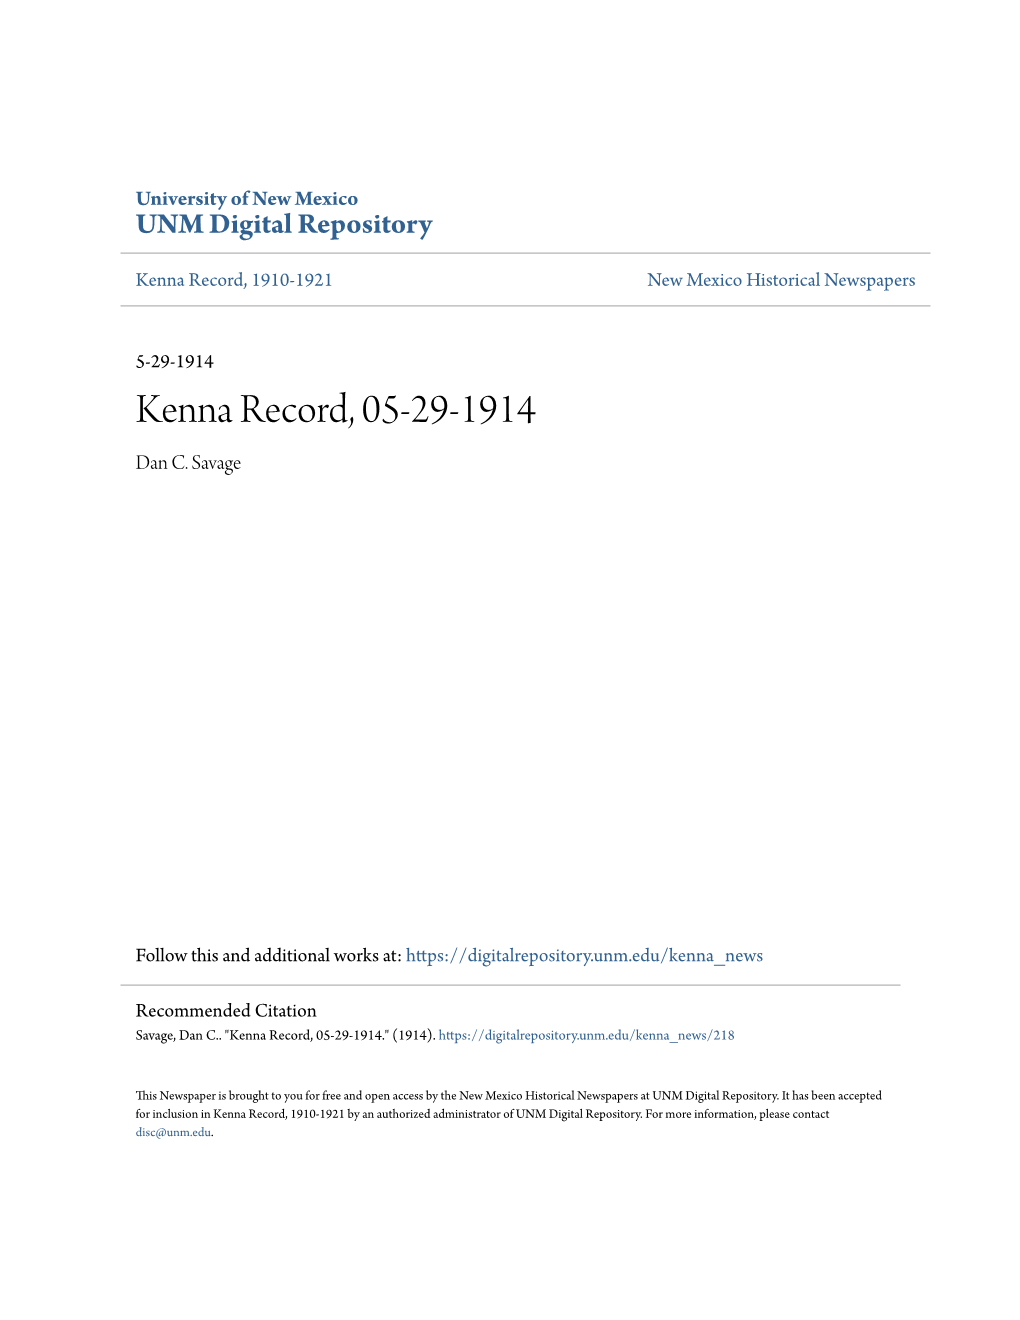 Kenna Record, 05-29-1914 Dan C